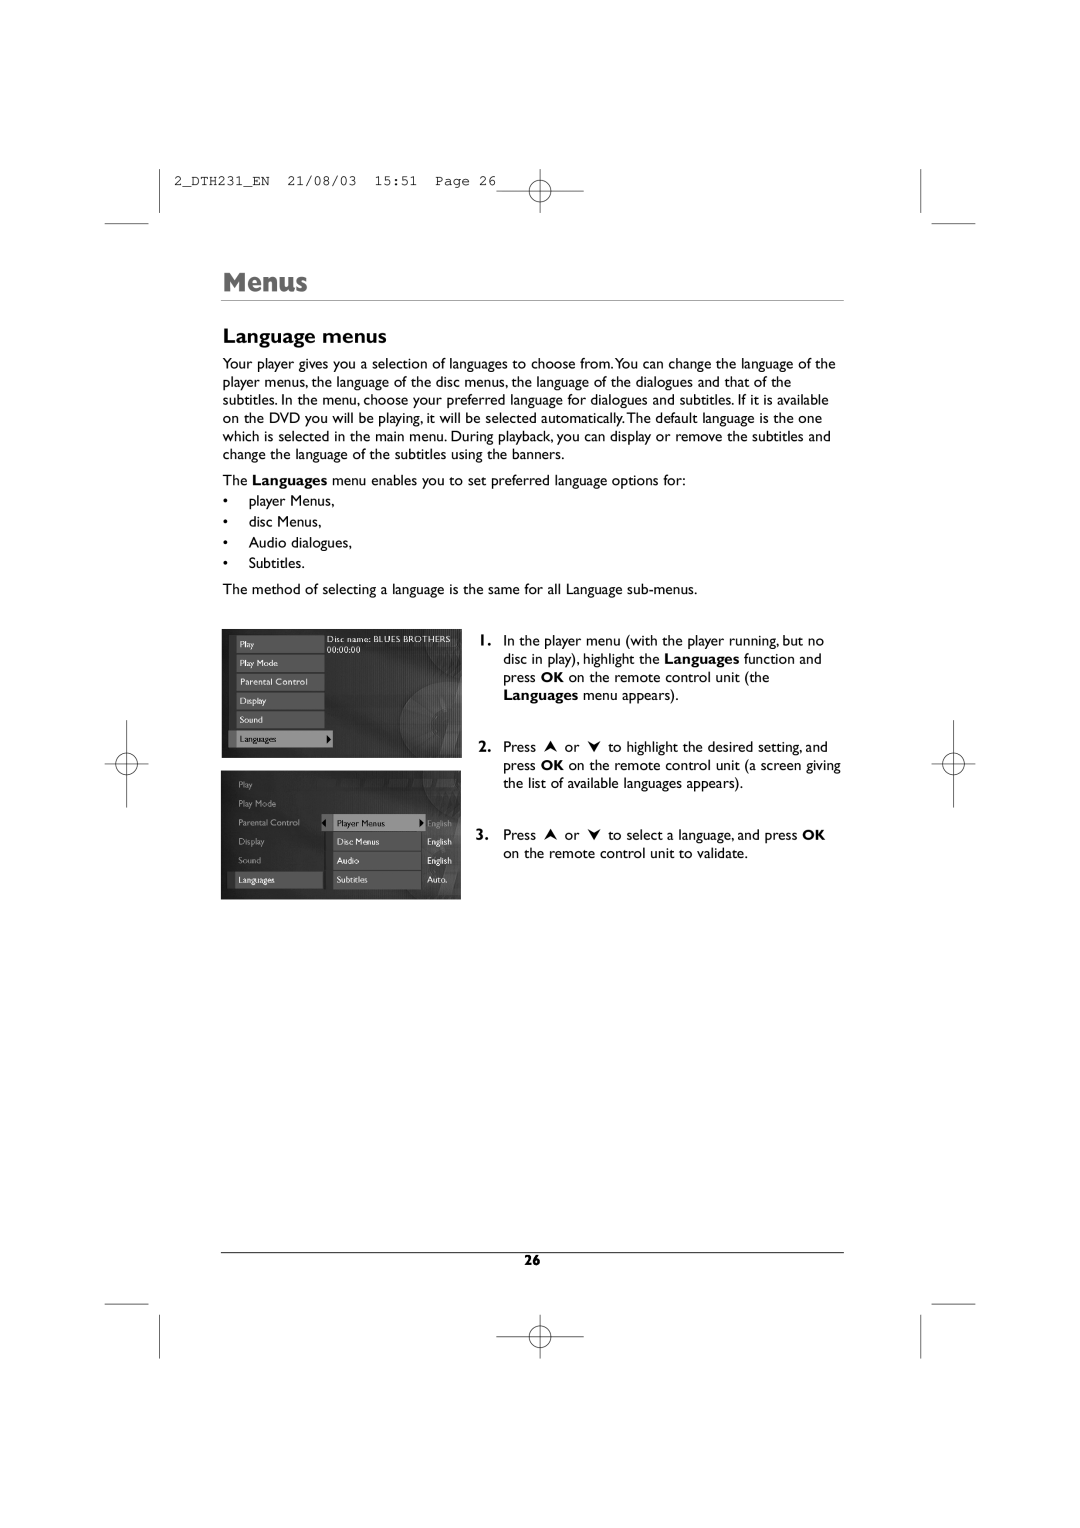 Technicolor - Thomson DTH231 manual Language menus, Menus 